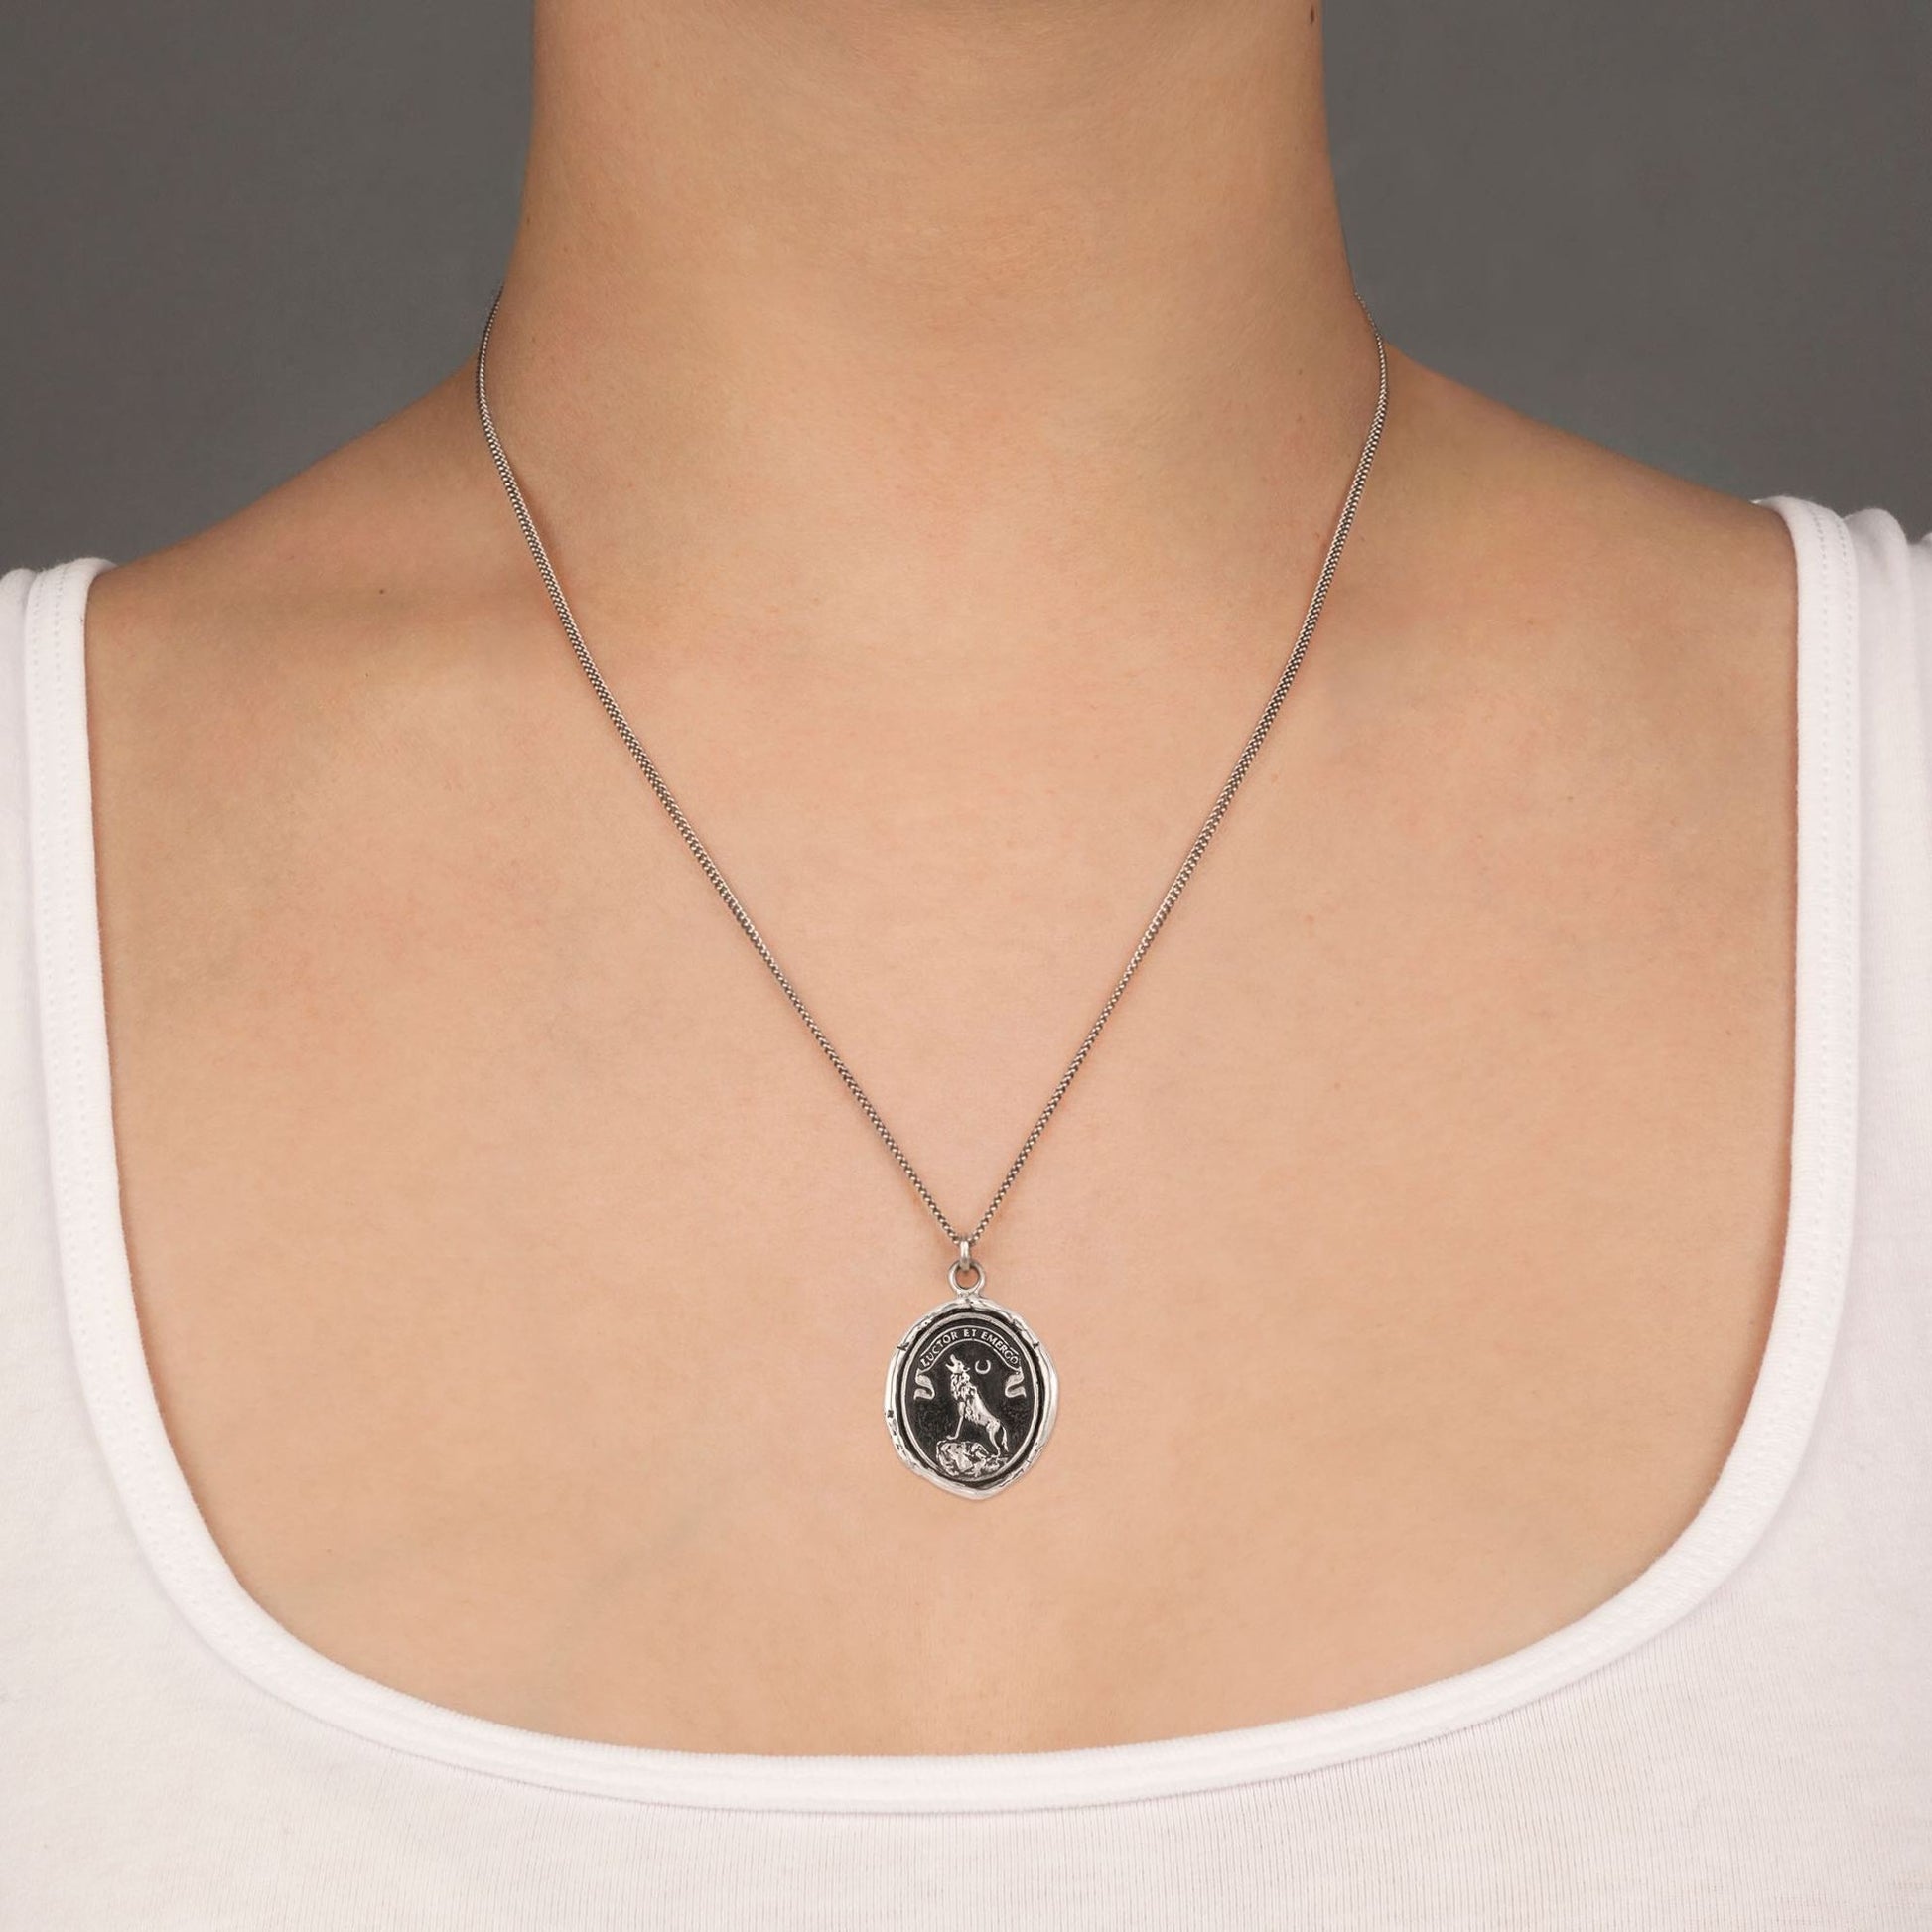 Pyrrha Talisman Necklace - Struggle & Emerge - Silver